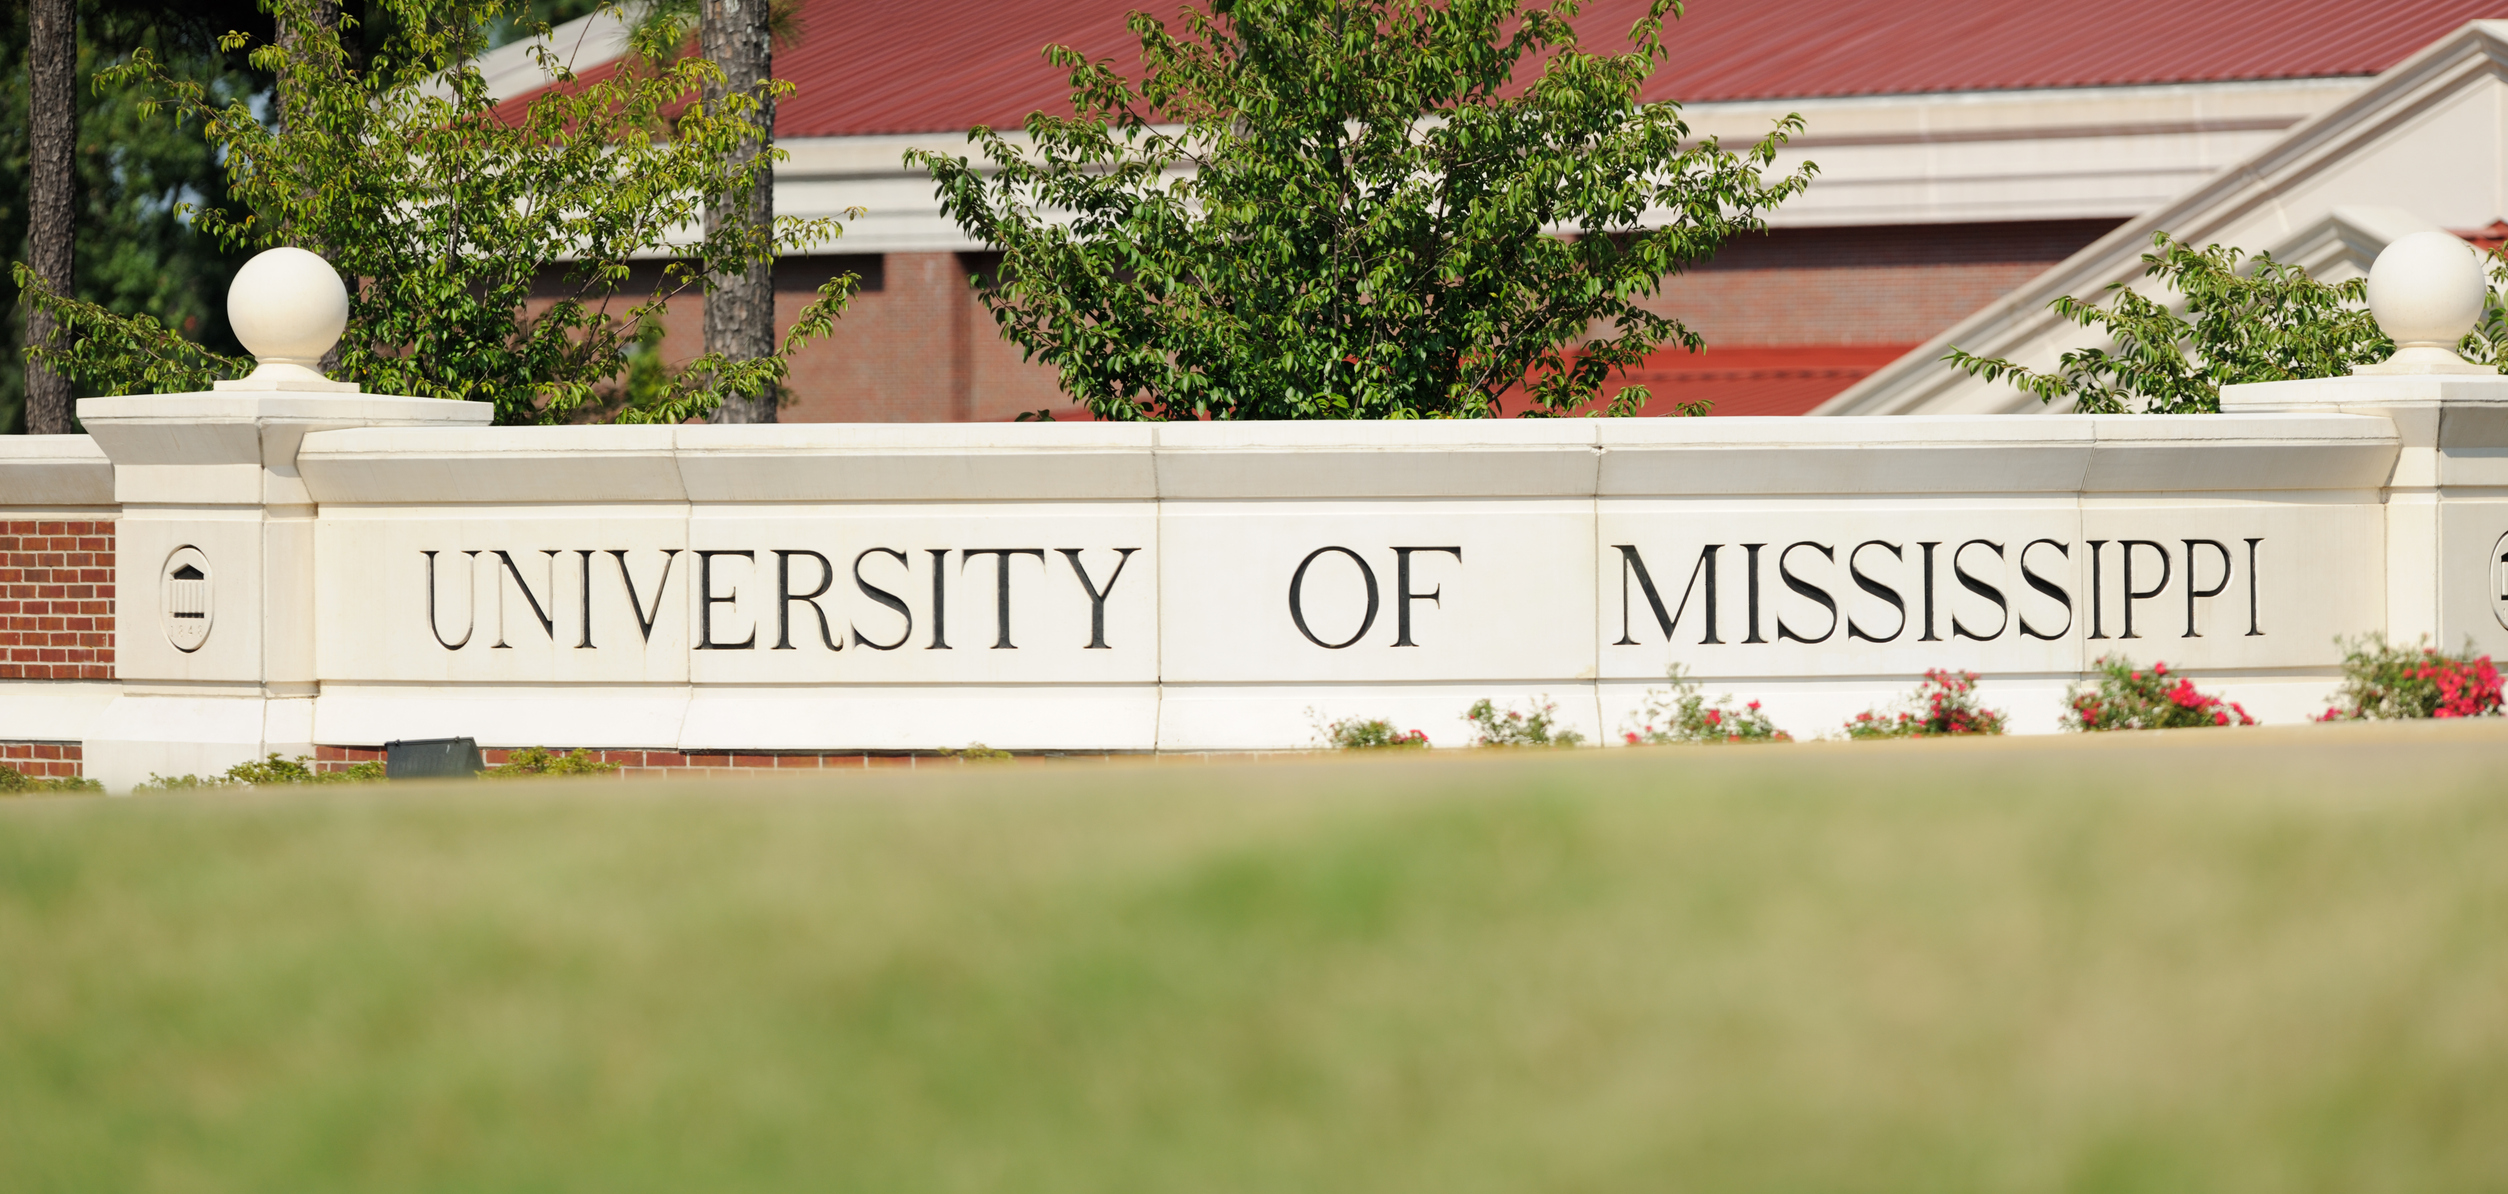 University of Mississippi sign